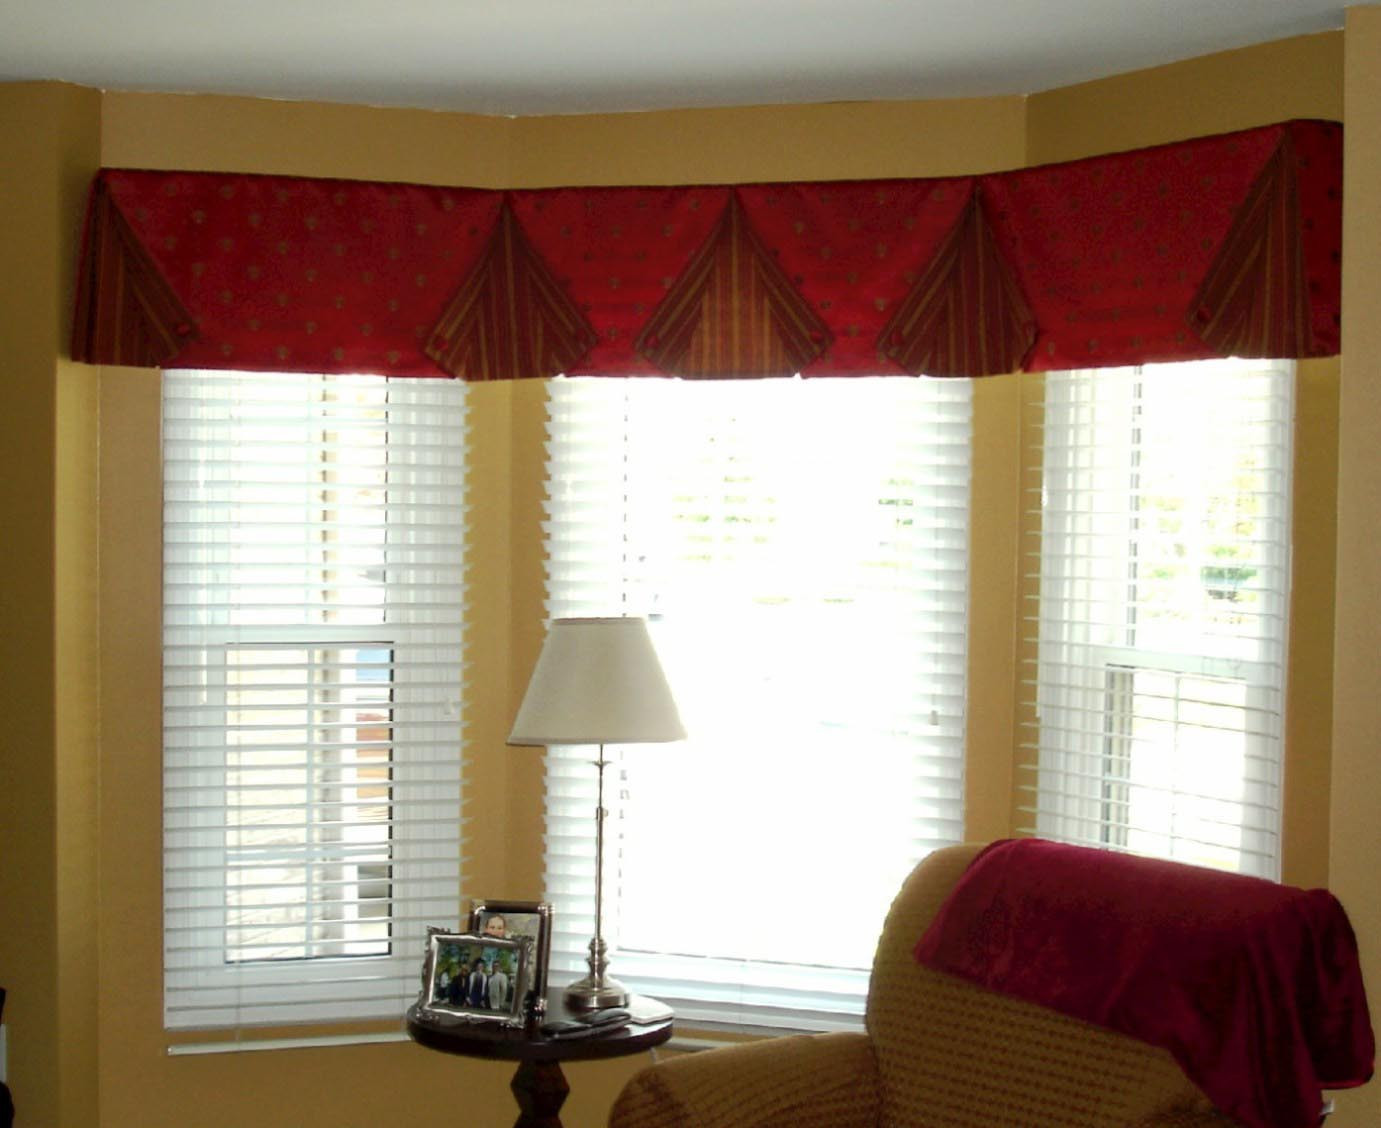 Window Valance Ideas Living Room
 Charming Valances for Living Room